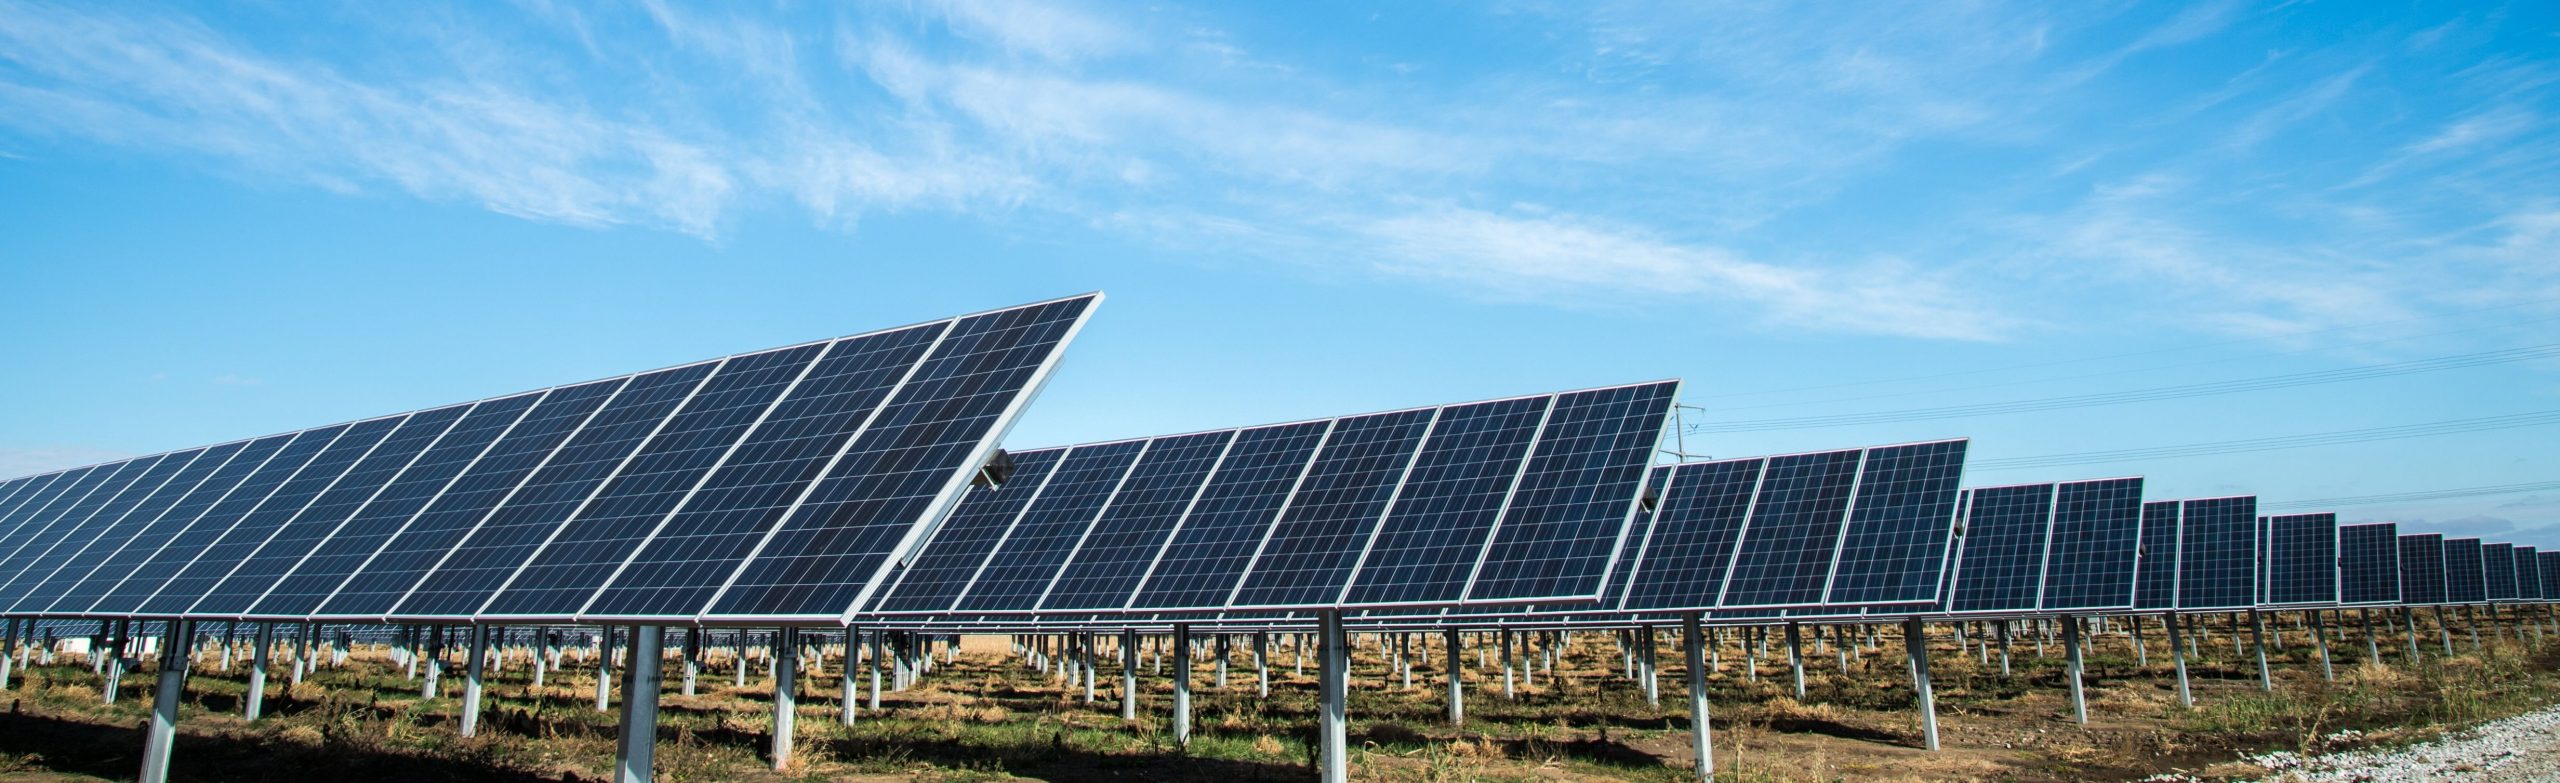 AleaSoft - Solar panels renewable energies